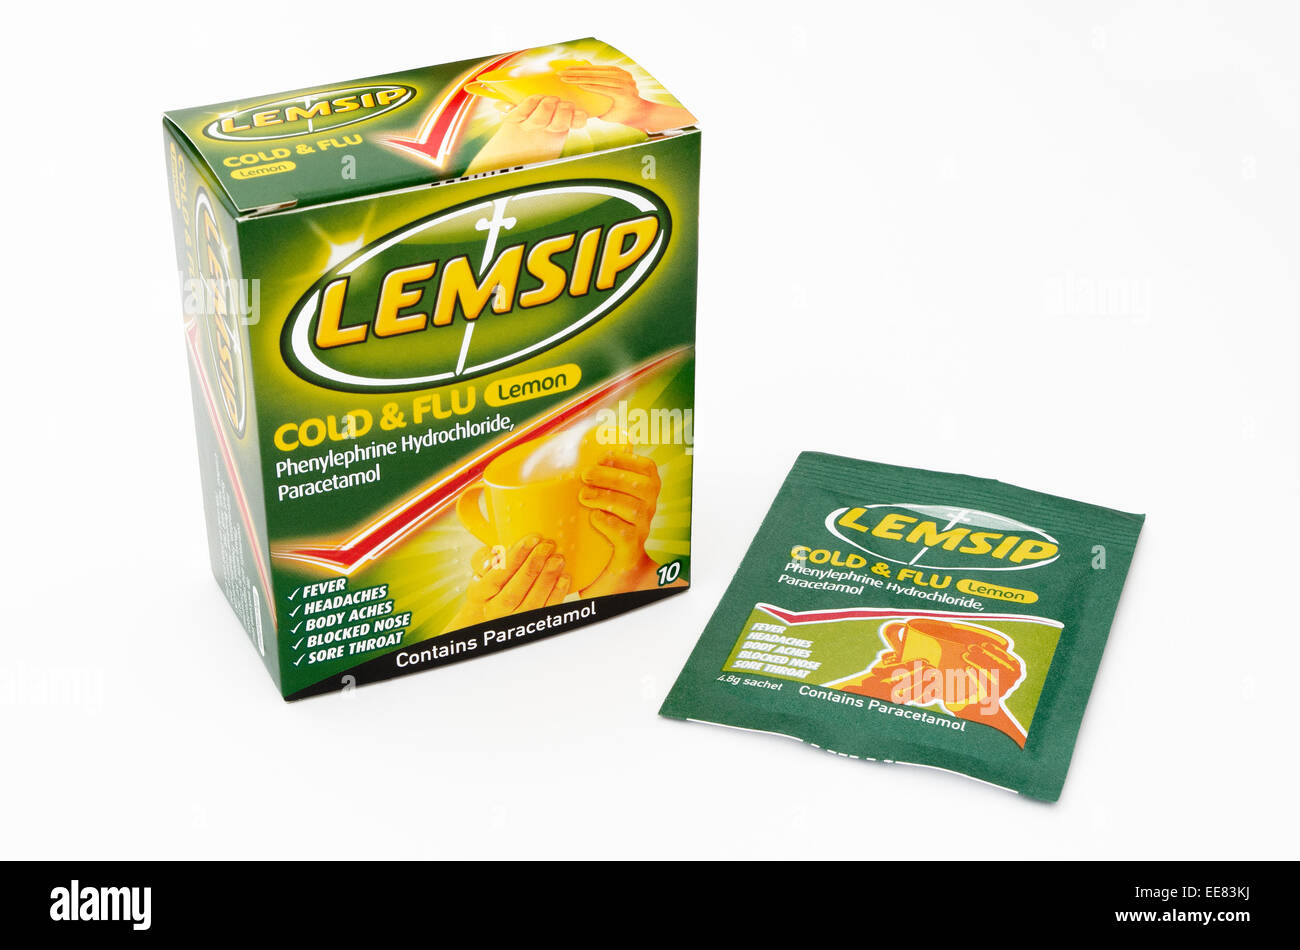 Lemsip Cold and Flu Lemon Powdered Medicine Drink, UK Stock Photo